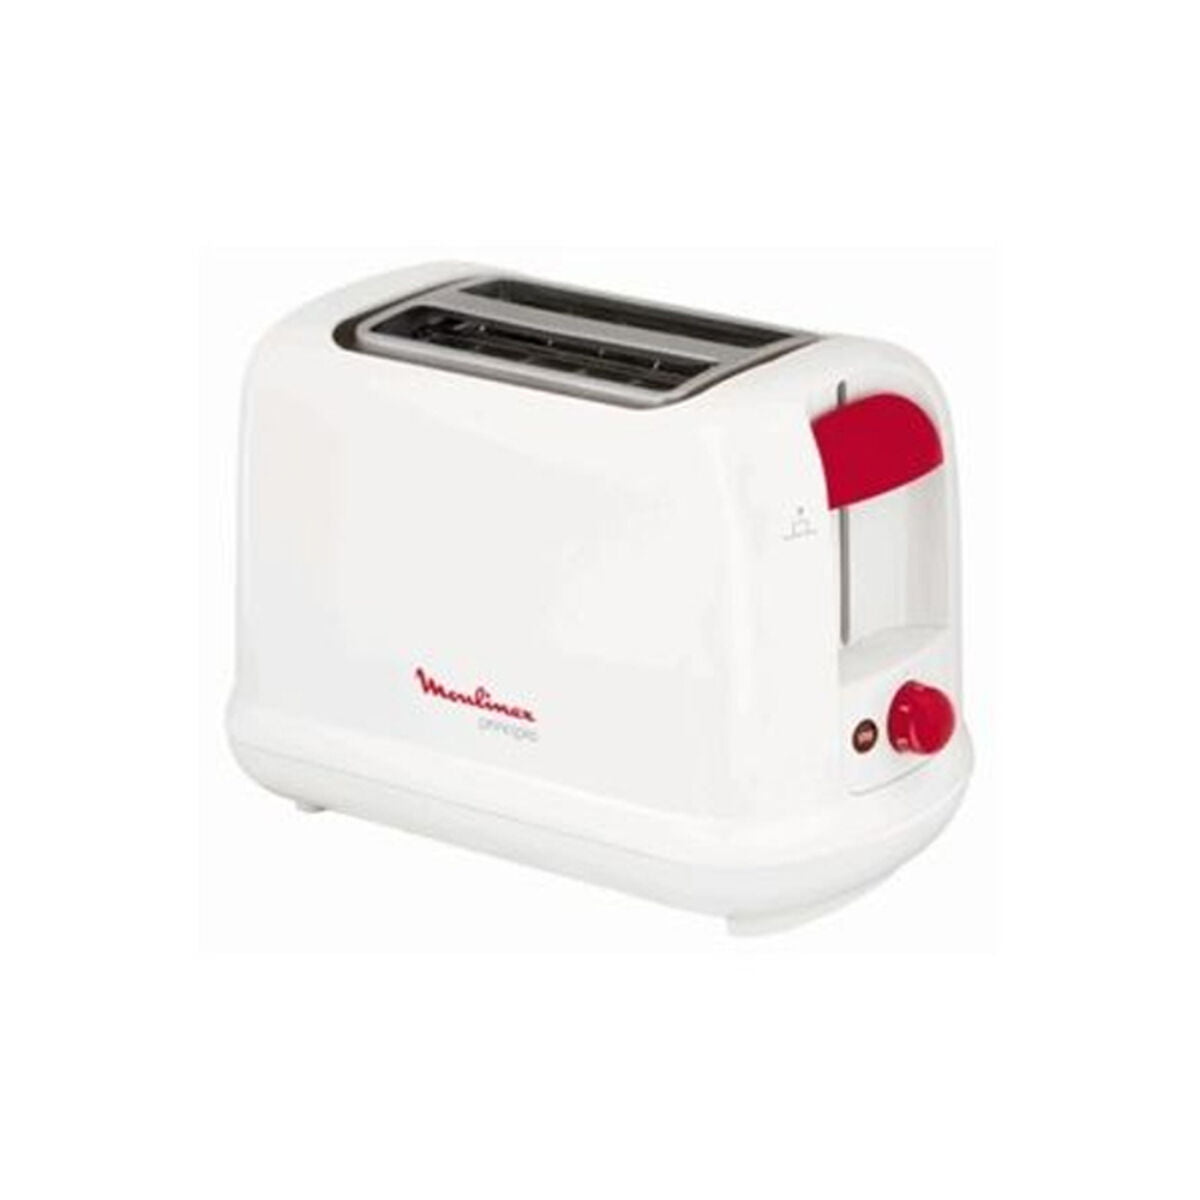 Toaster Moulinex LT160111 Weiß 850 W - CA International 